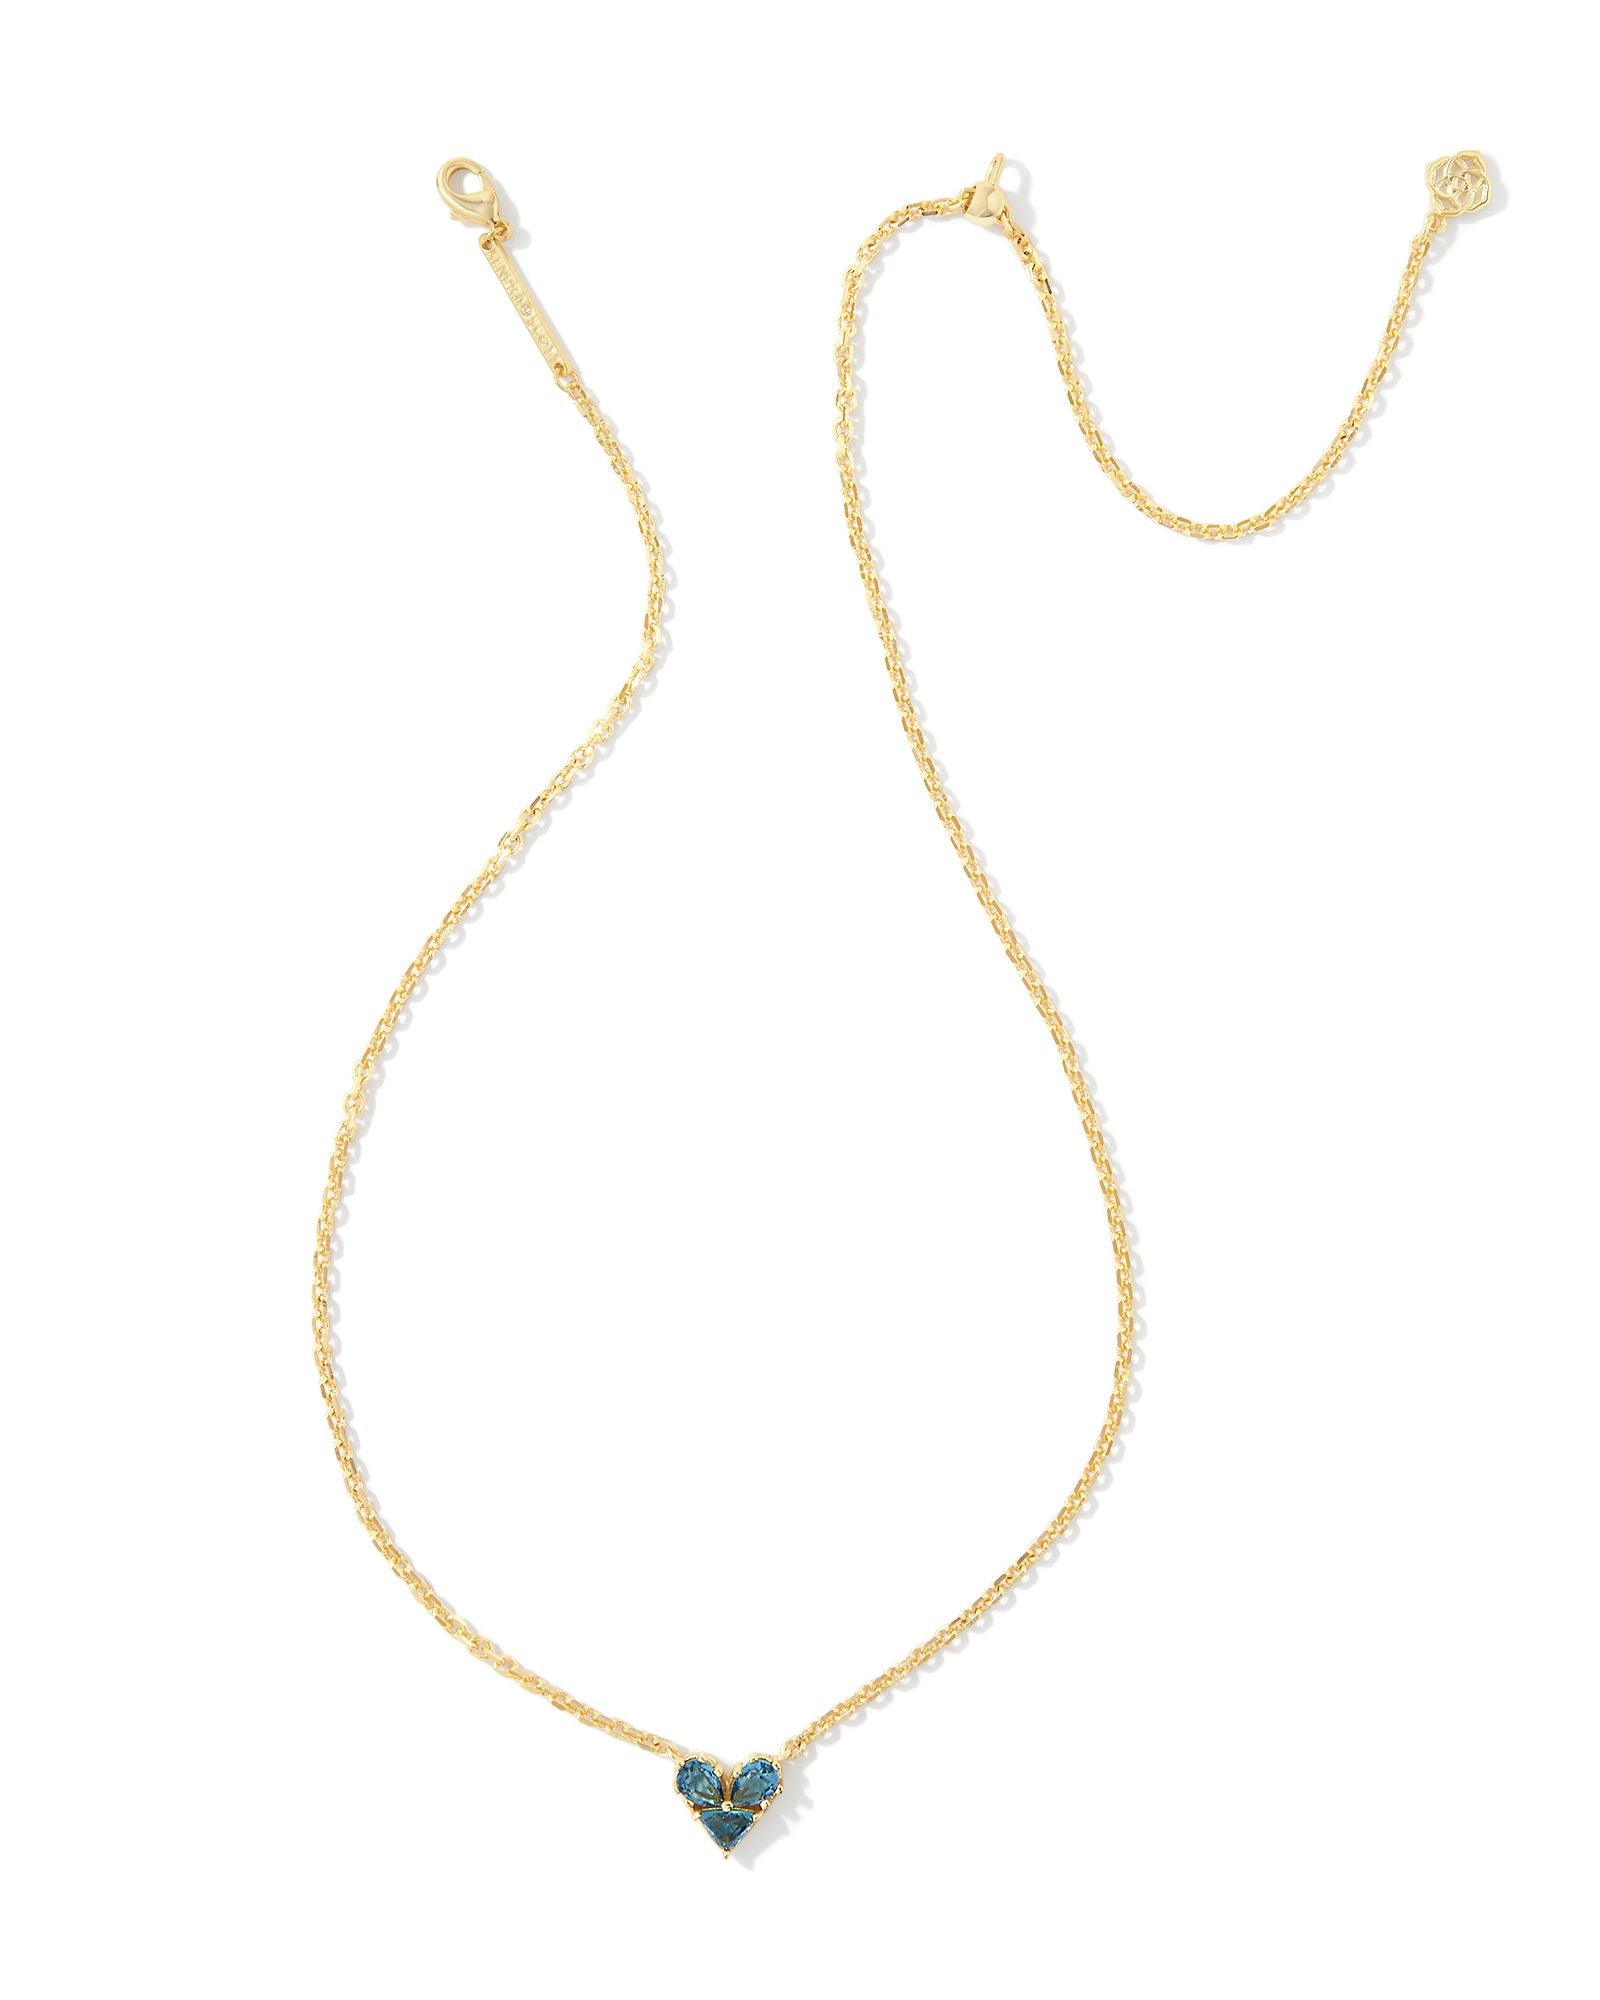 Katy Gold Heart Short Pendant Necklace Teal Crystal